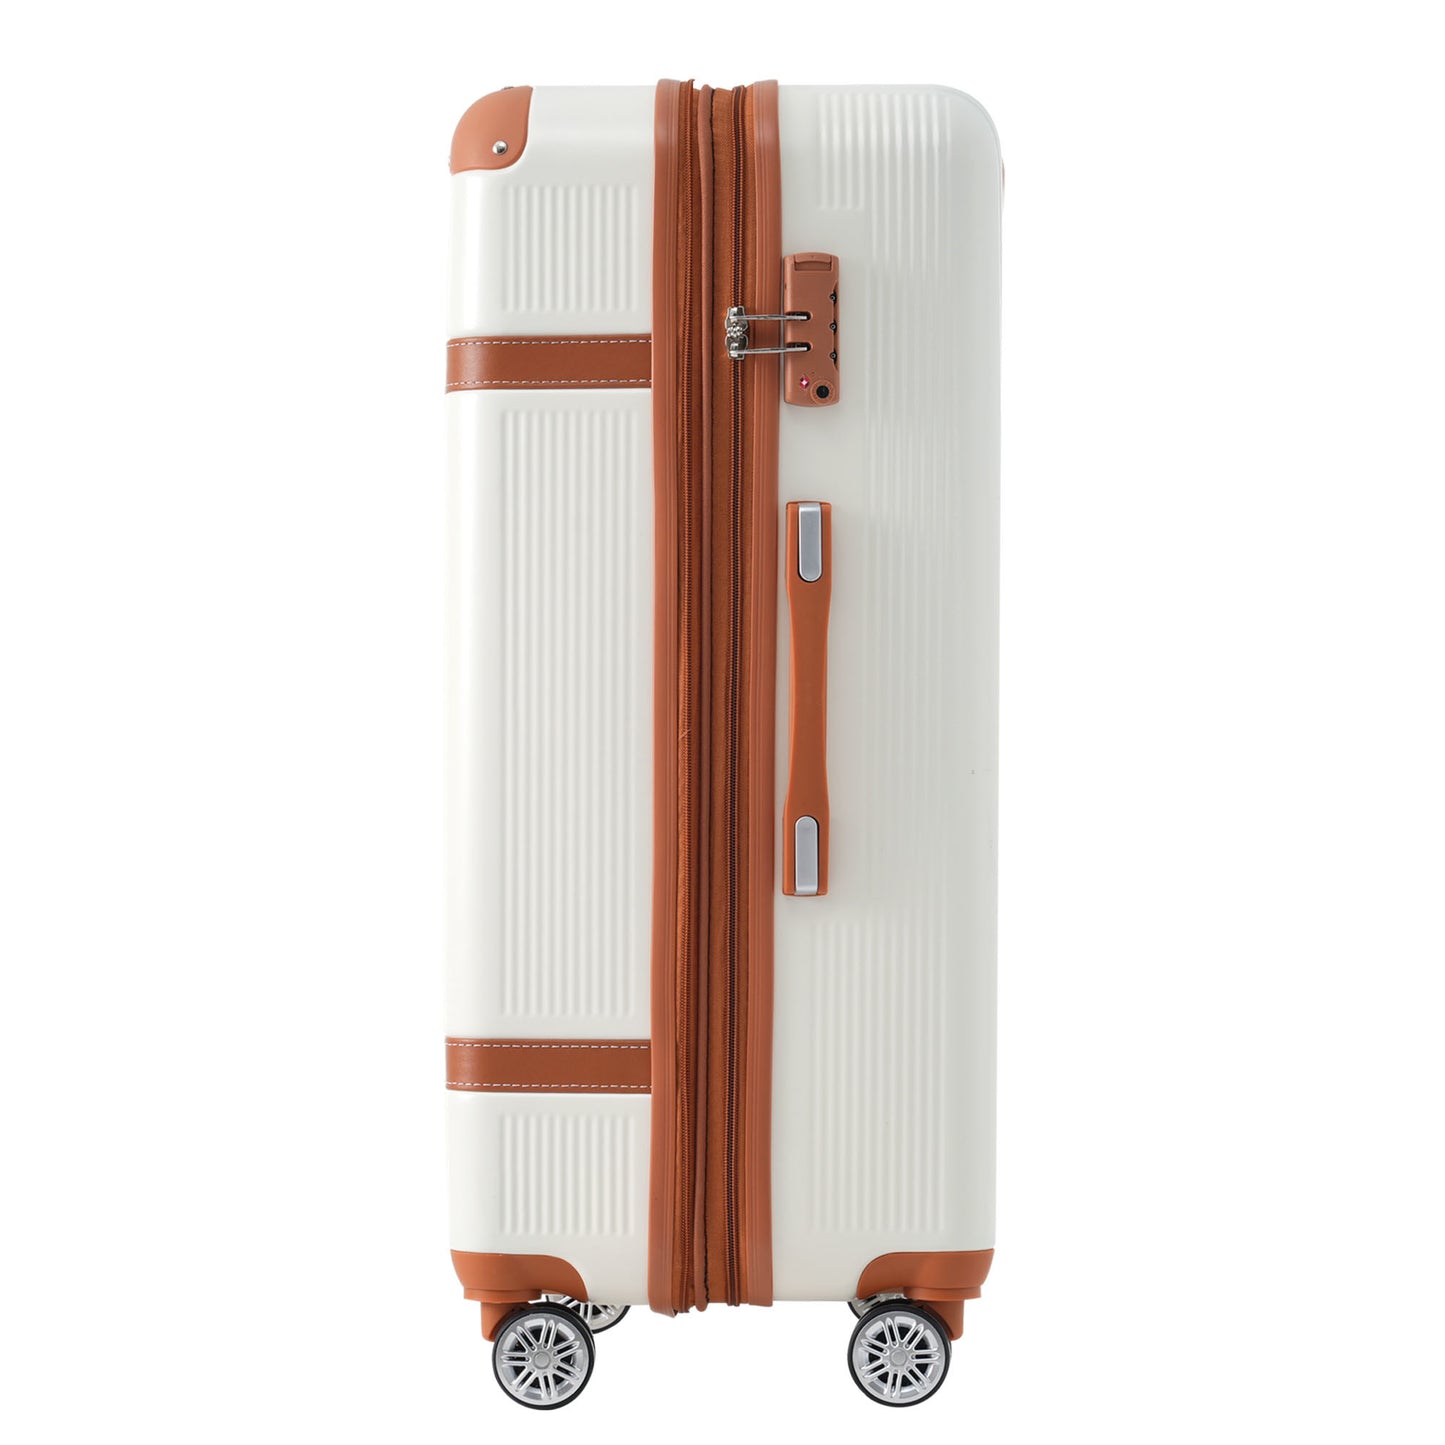 3-Piece Vintage Style Luggage Set in White